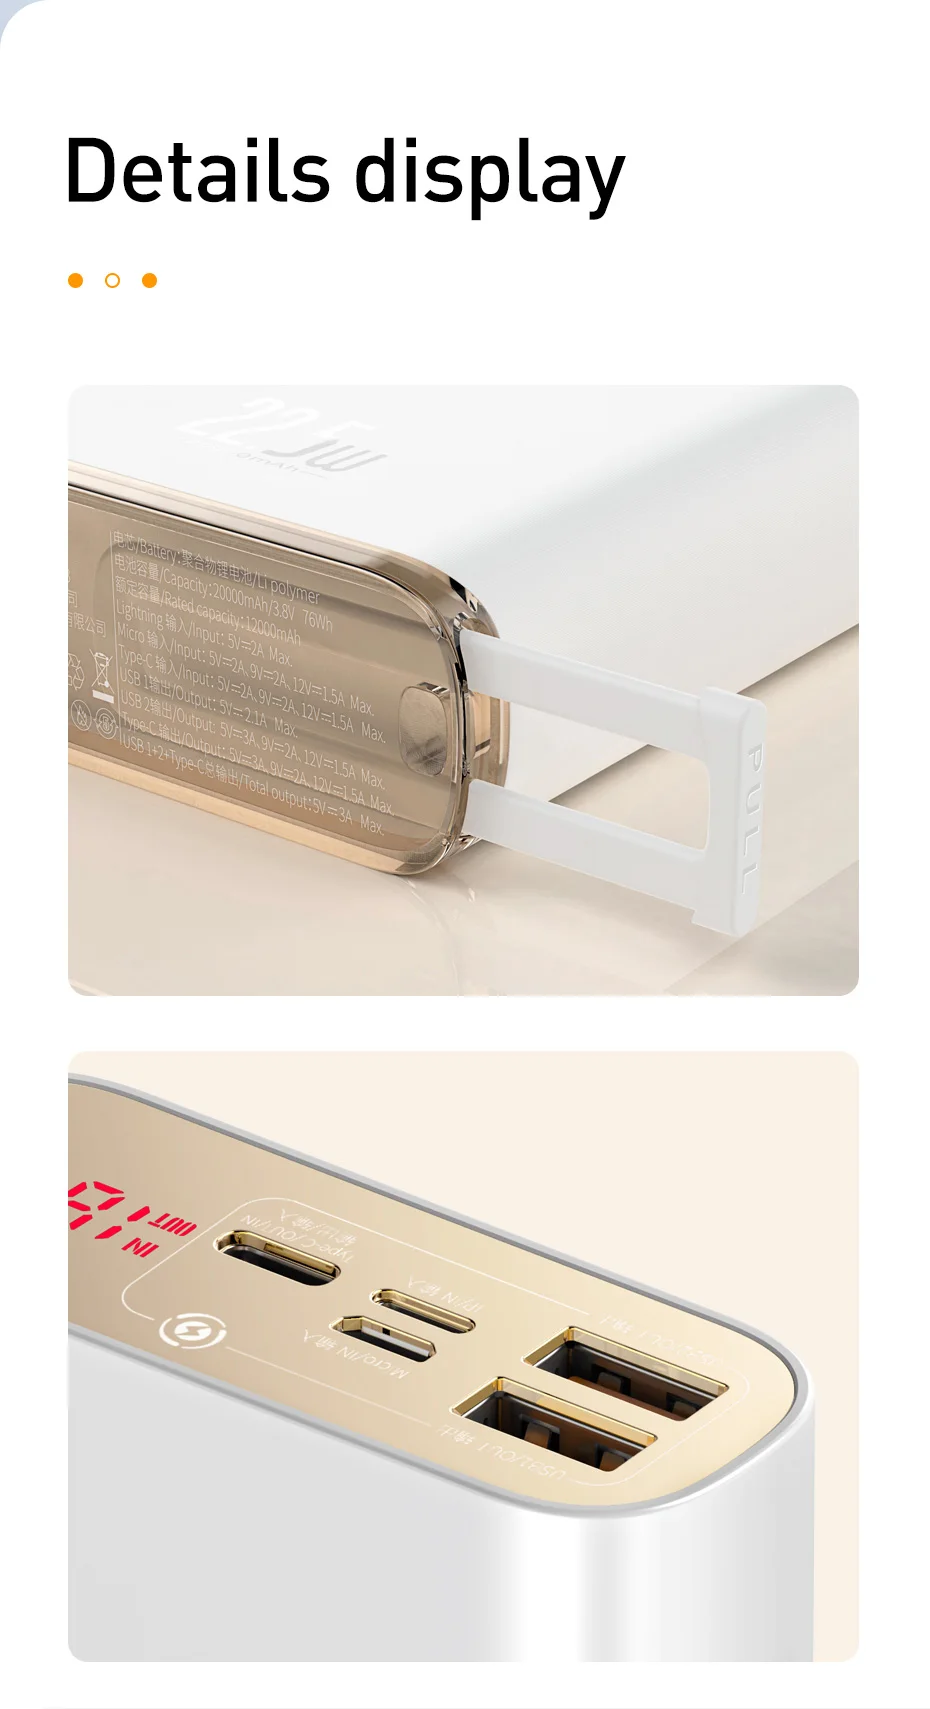 Baseus Quick Charge 3,0 20000 мАч Внешний аккумулятор USB C PD 5A SCP внешний аккумулятор для huawei Xiaomi iPhone портативное Внешнее зарядное устройство